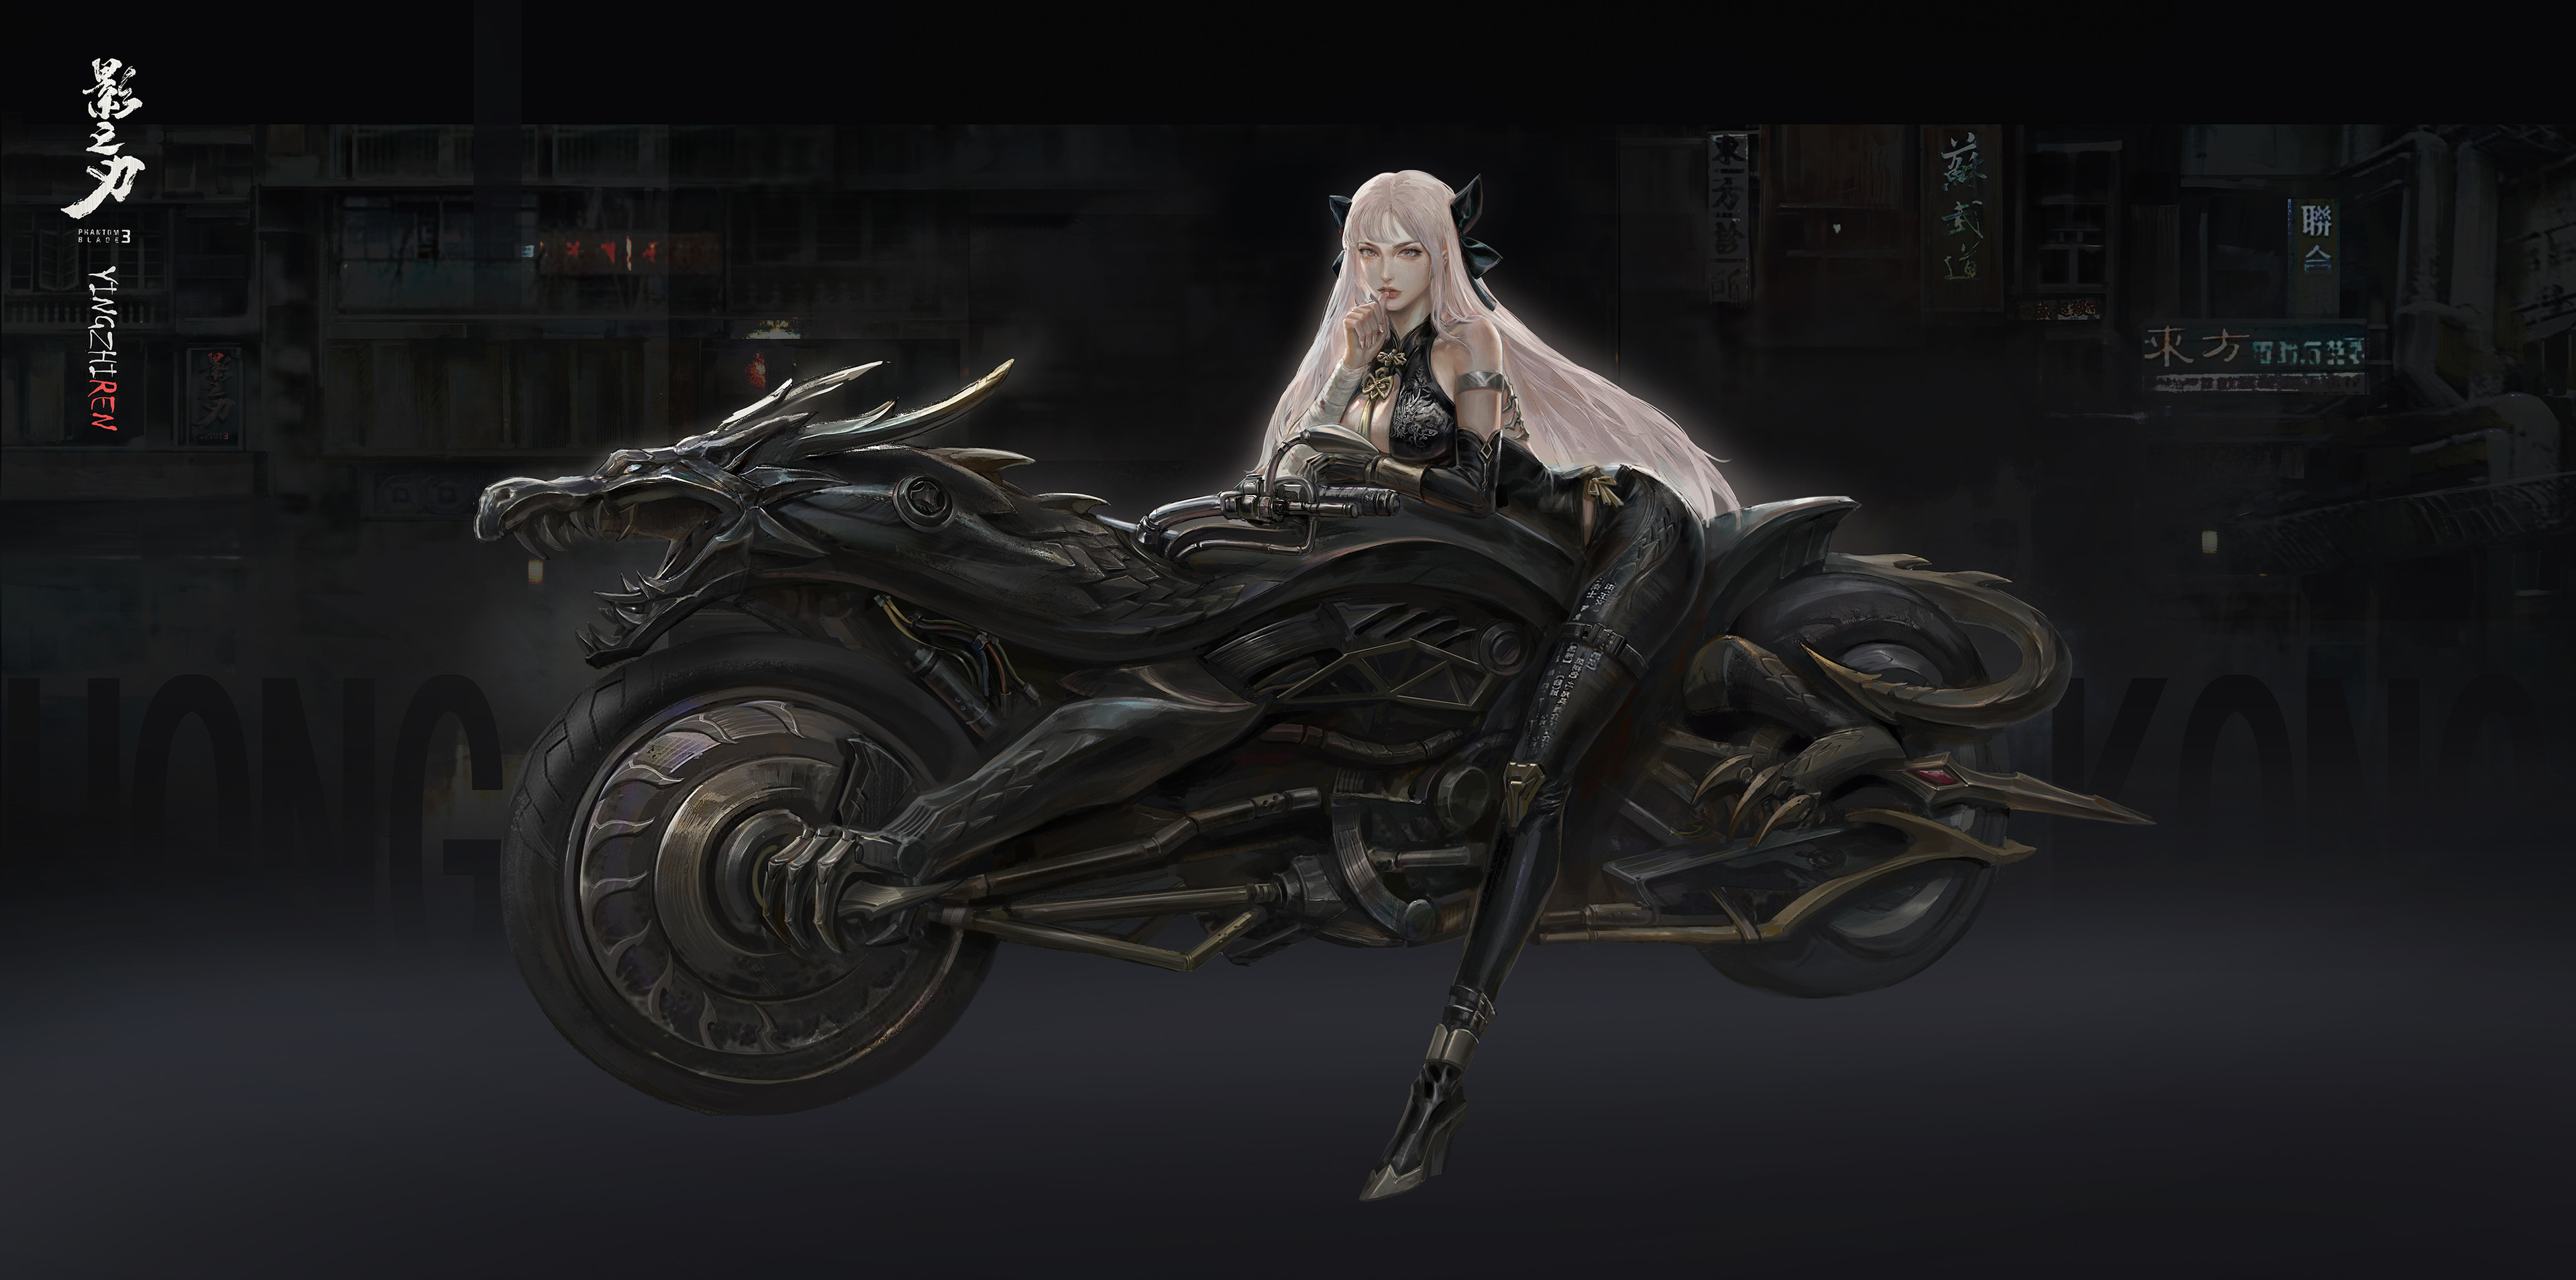 General 3840x1908 Yi Zhi drawing women long hair black clothing motorcycle dragon